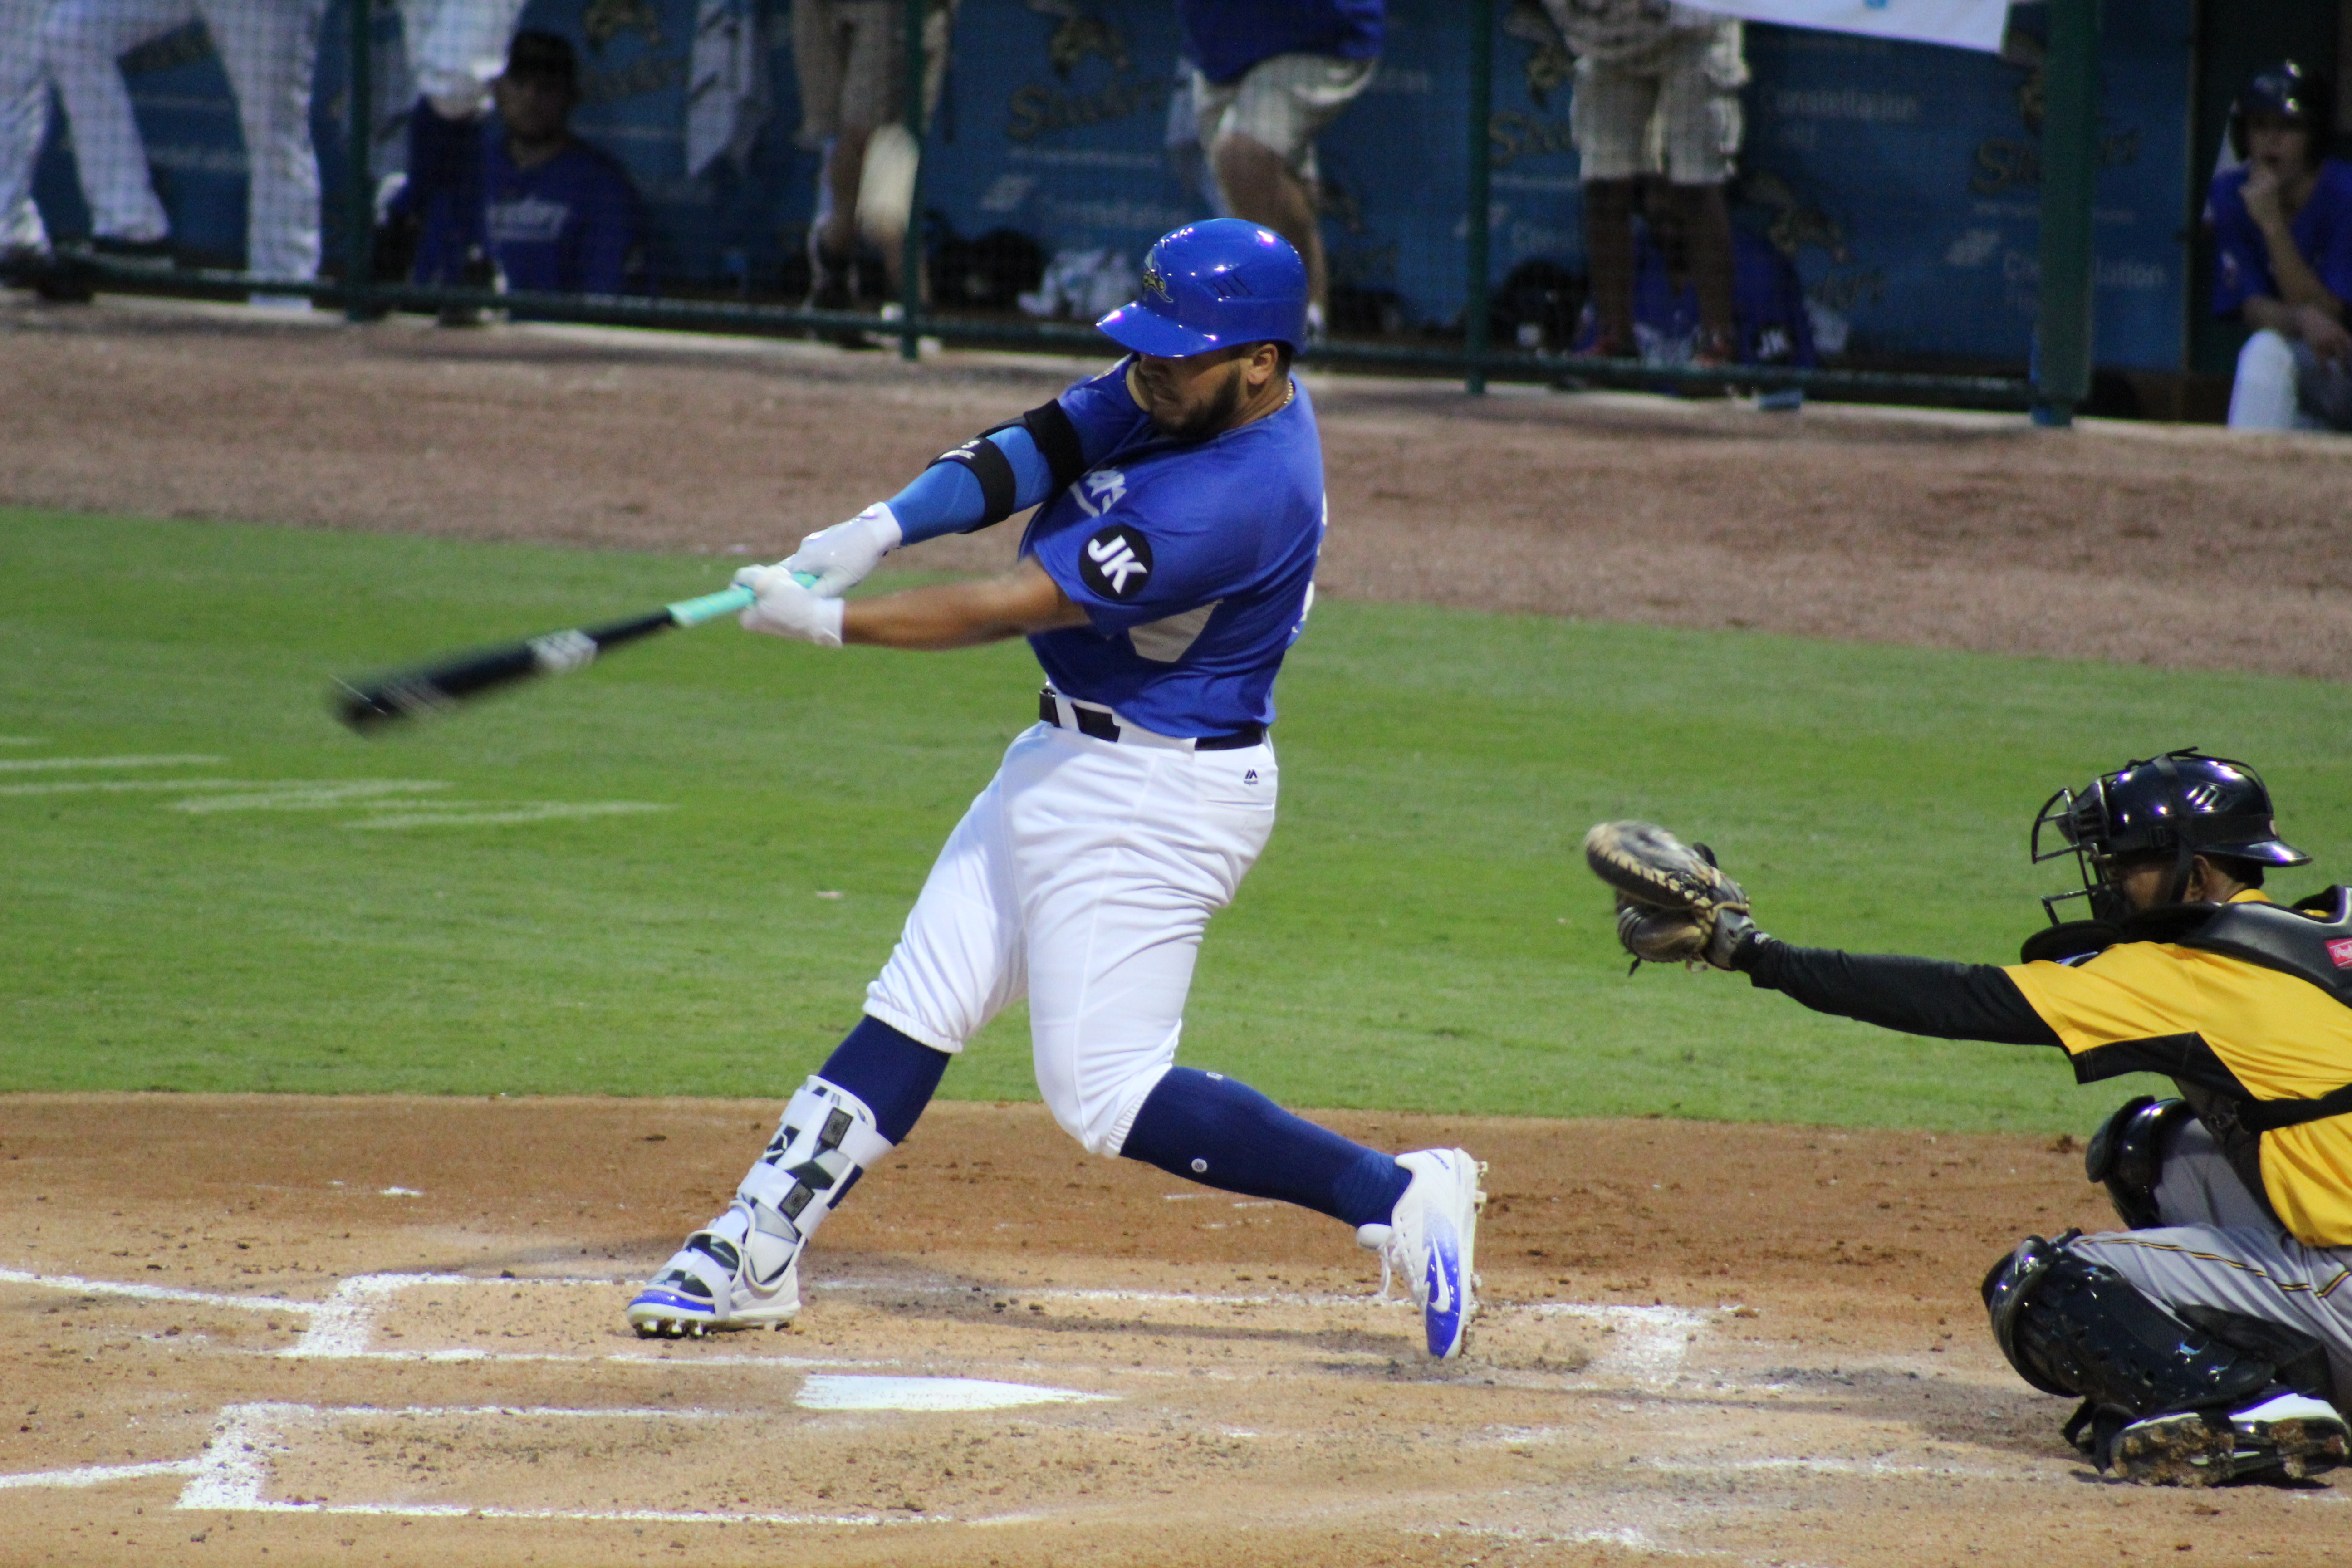 Sugar Land Skeeters player up to bat during a game.